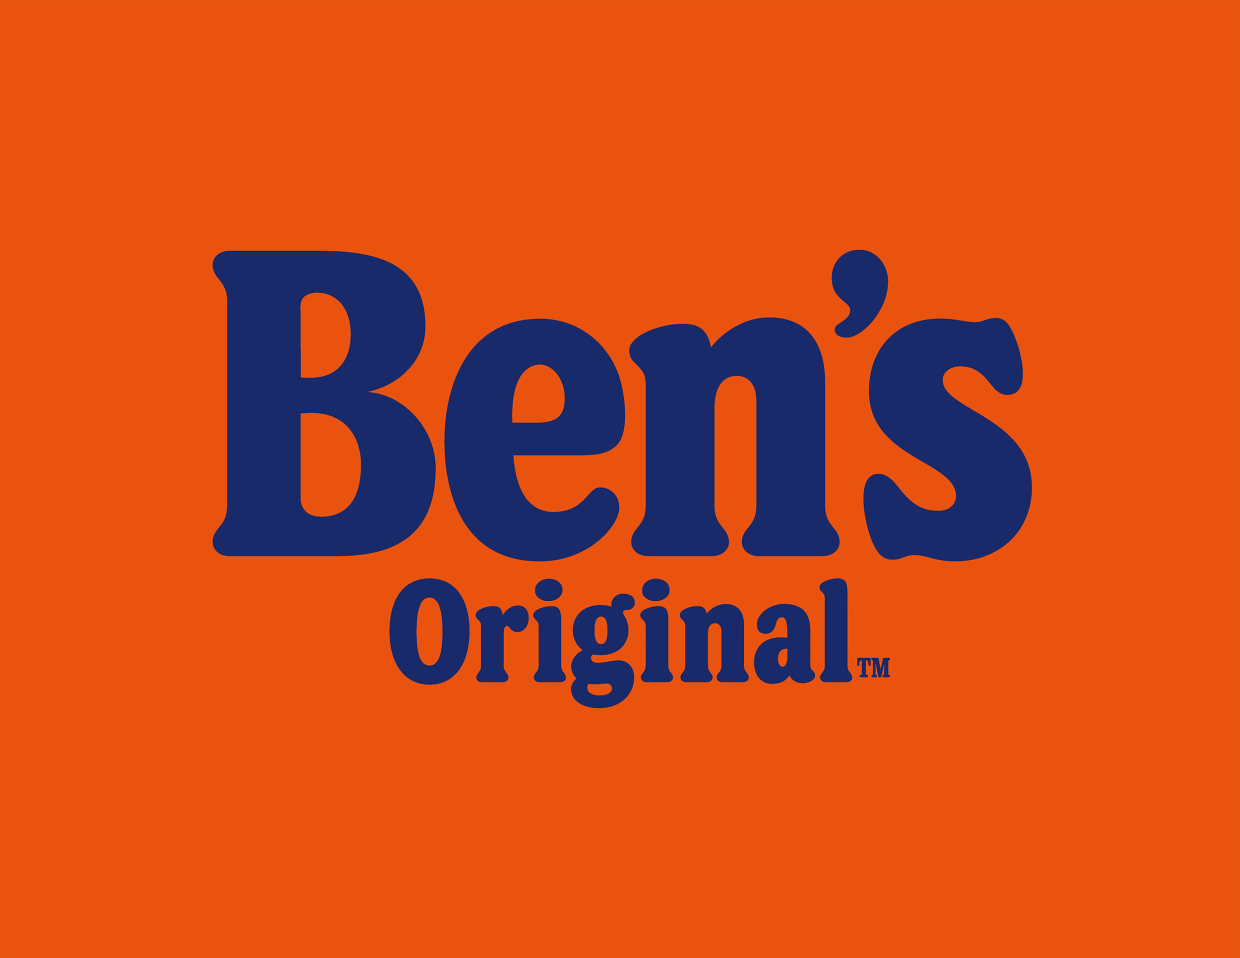 Uncle Ben's rice has a brand new name: Ben's Original